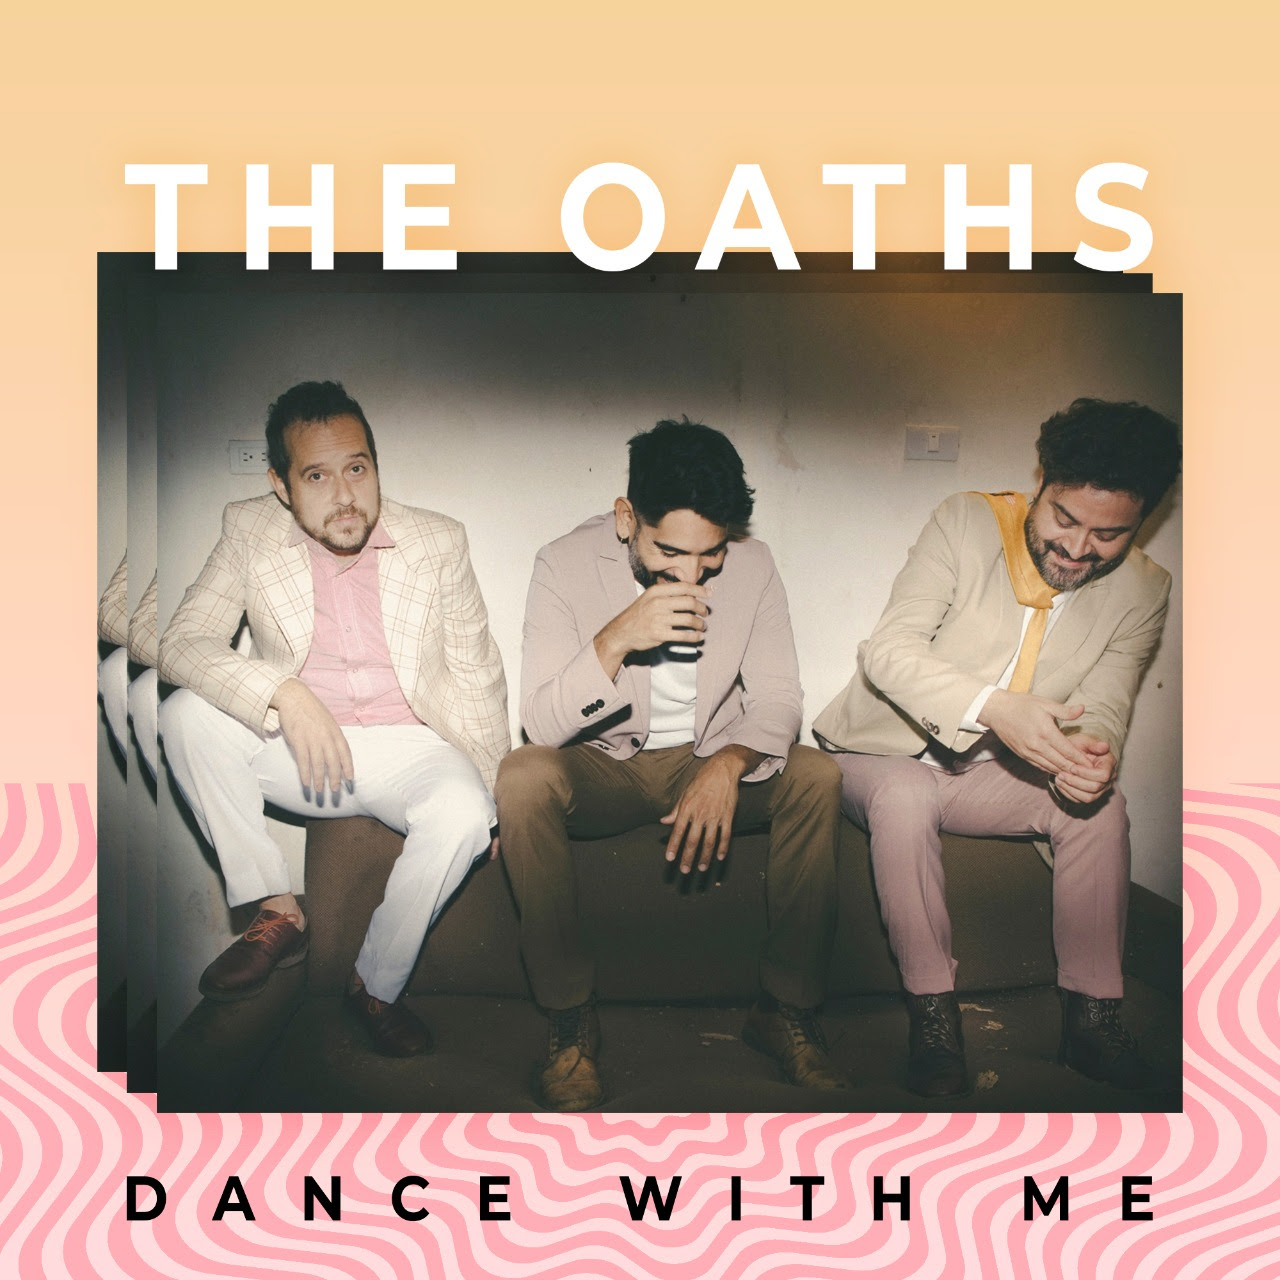  The Oaths se renueva con “Dance With Me”